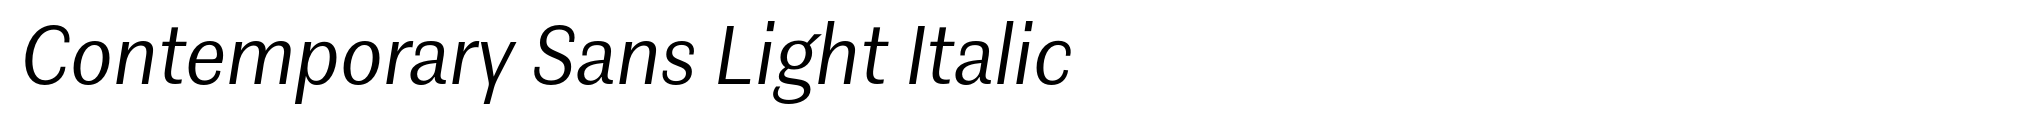 Contemporary Sans Light Italic image